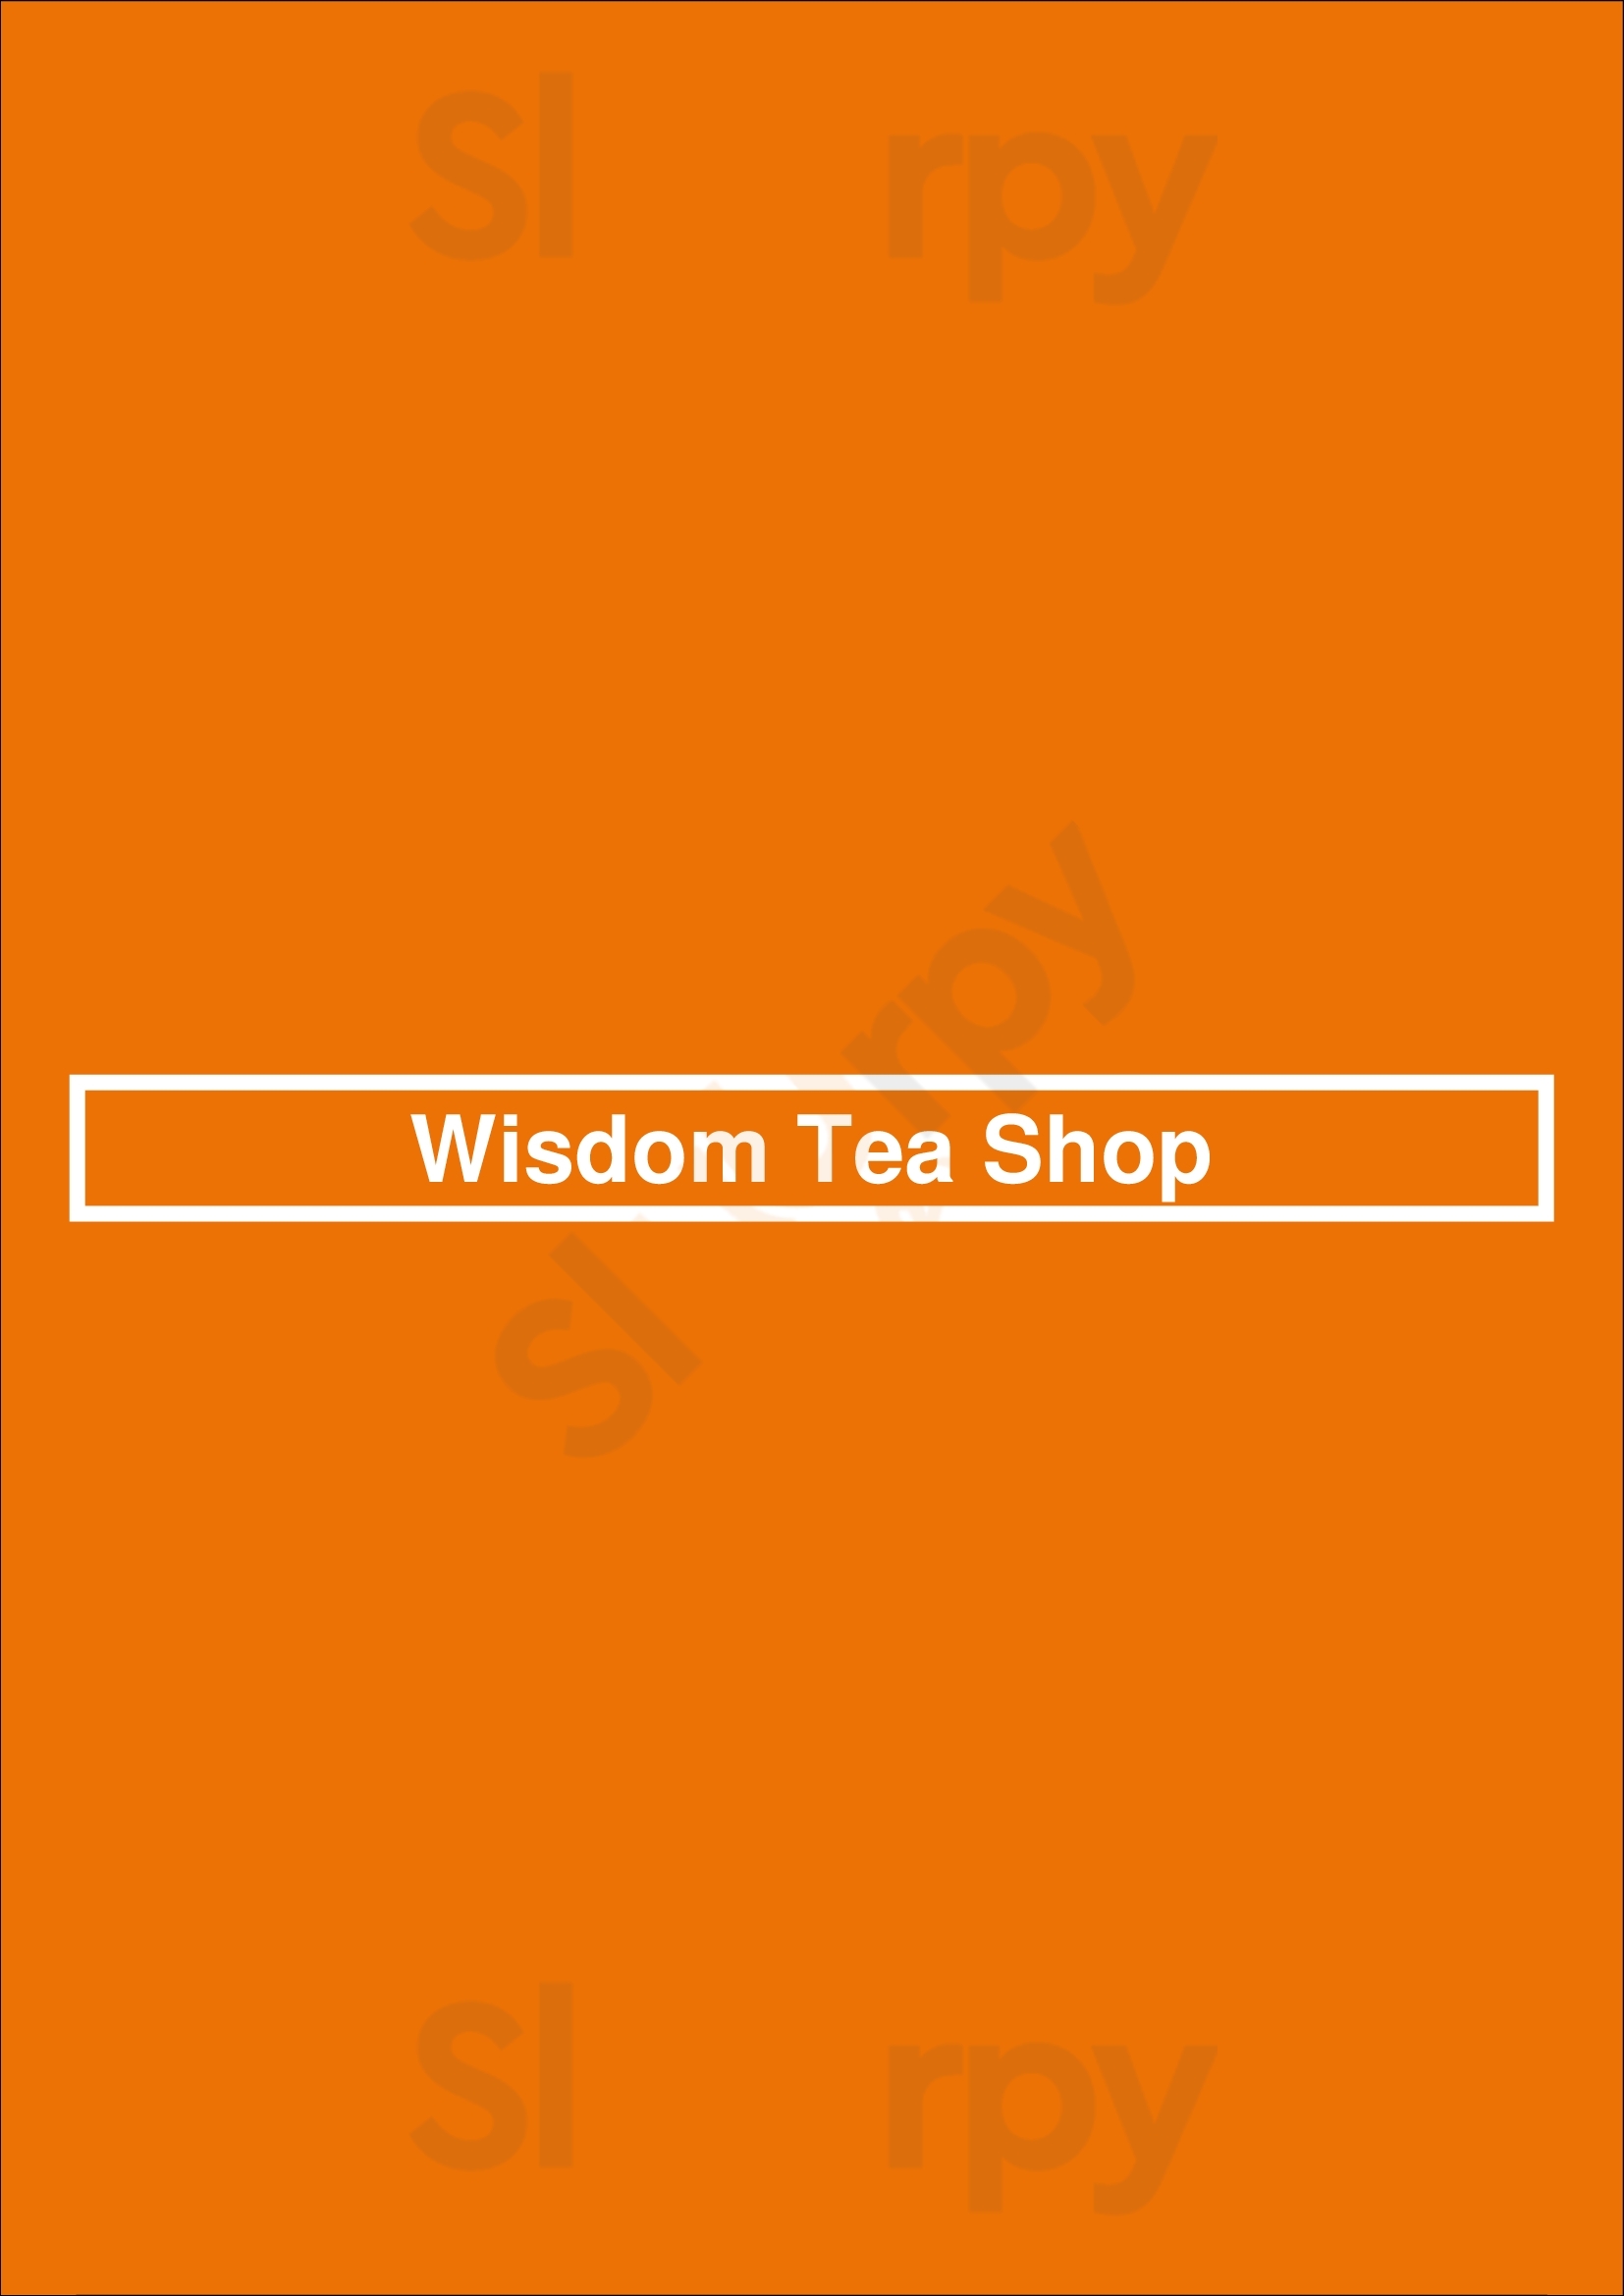 Wisdom Tea Shop London Menu - 1